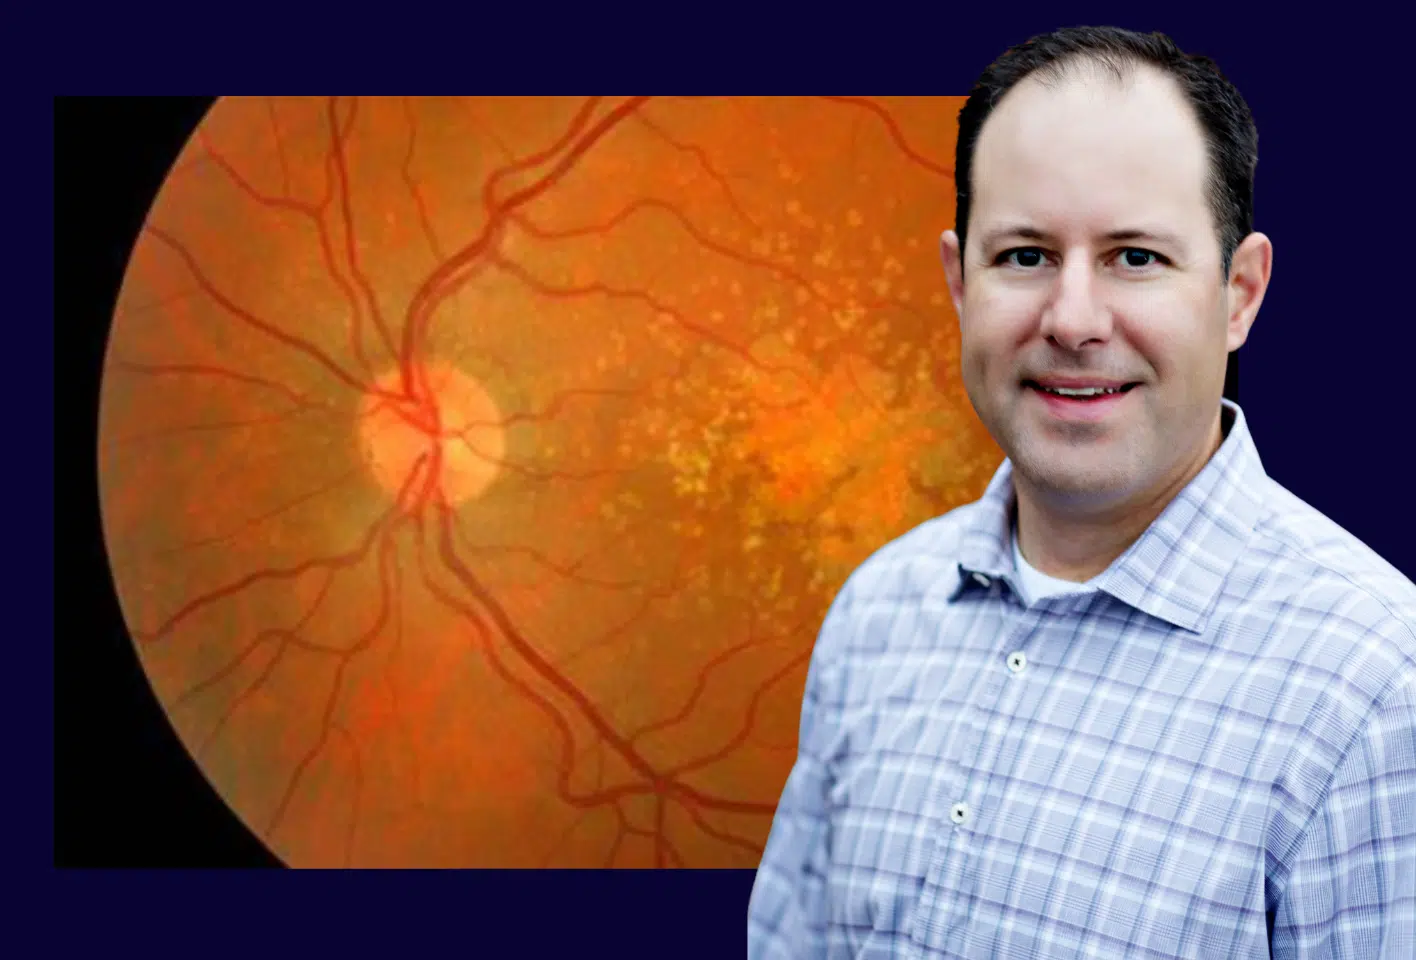 Banner image of retinal photo and optometrist Dr. Bryan.